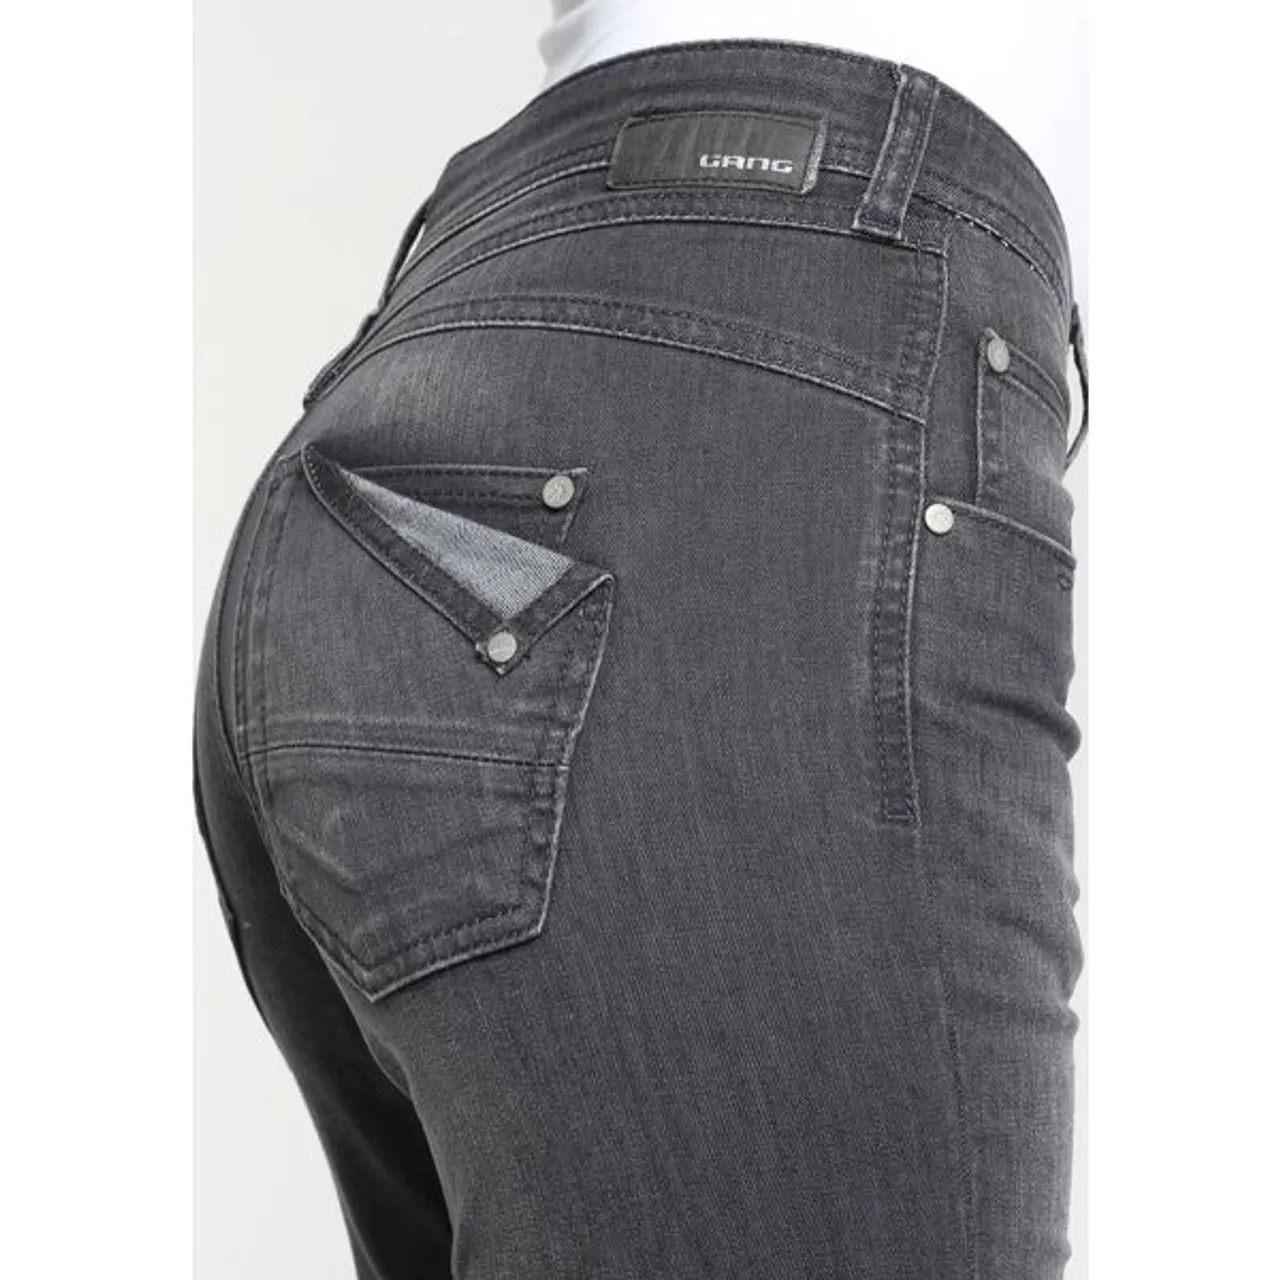 Relax-fit-Jeans GANG "94AMELIE" Gr. 26 (34), N-Gr, schwarz (universal class wash (black used)) Damen Jeans Weite